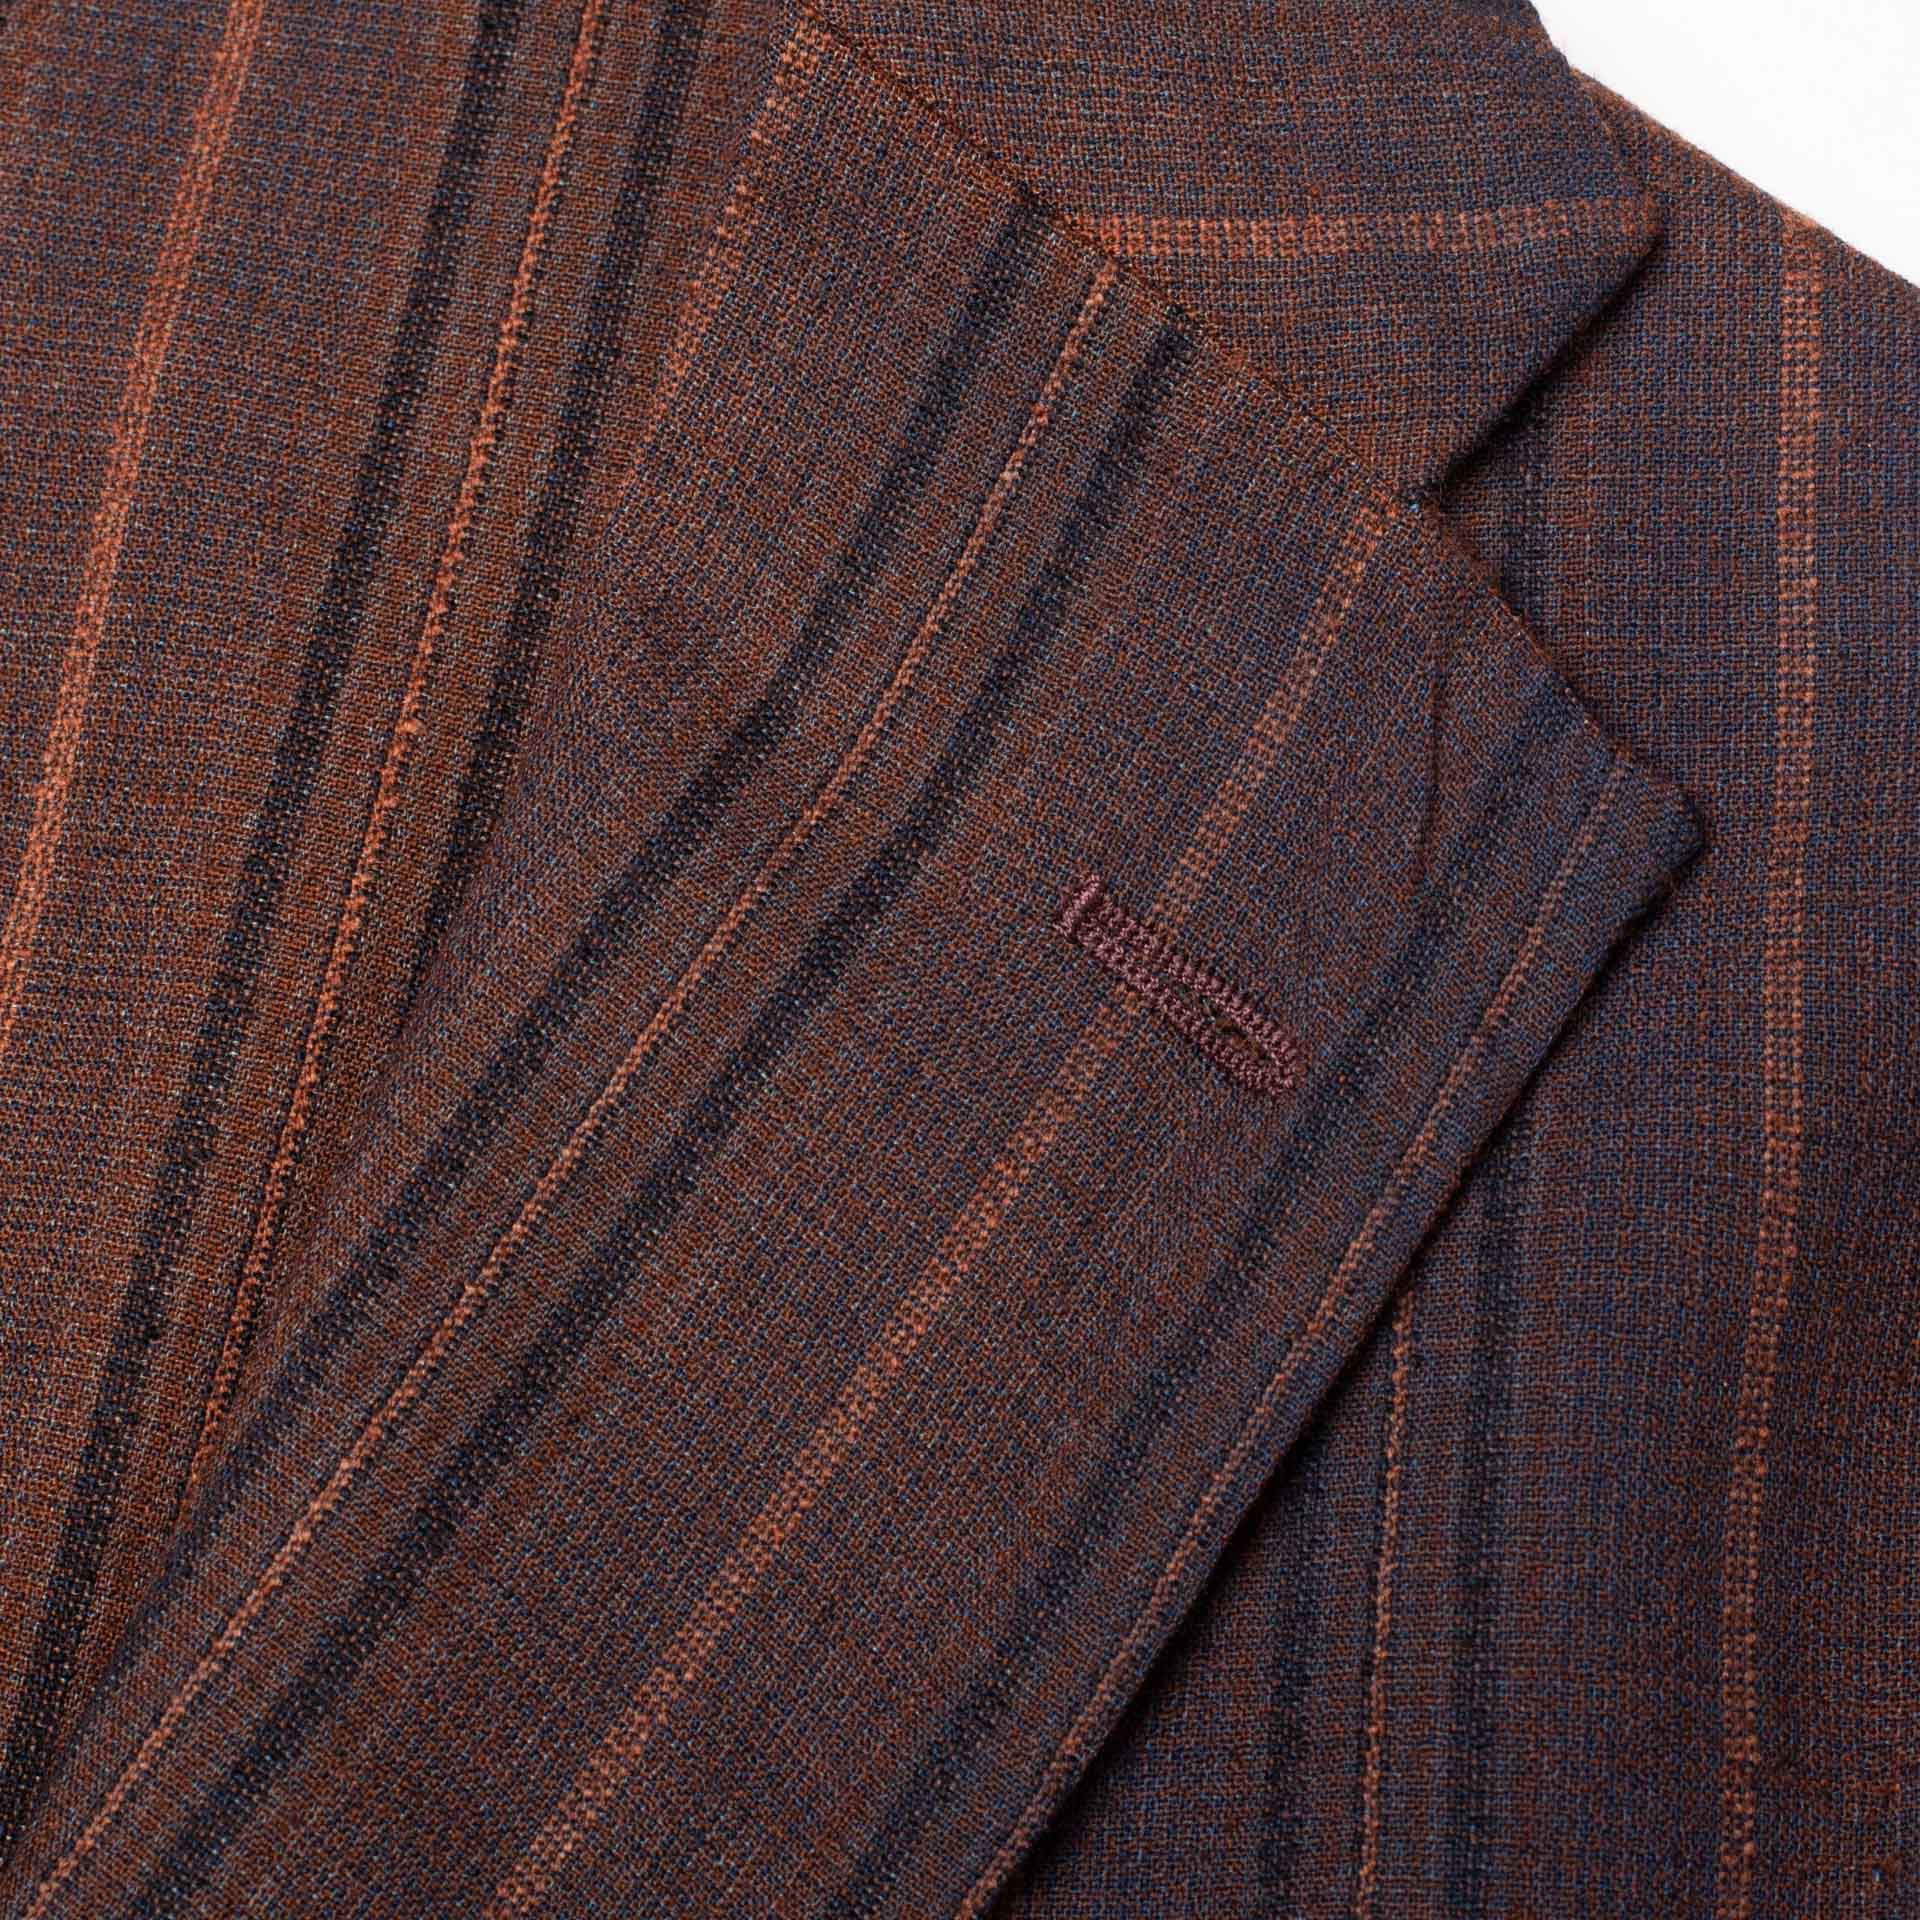 BOGLIOLI Galleria Bluish Brown Striped Wool-Silk Unconstructed Jacket 48 NEW 38 BOGLIOLI